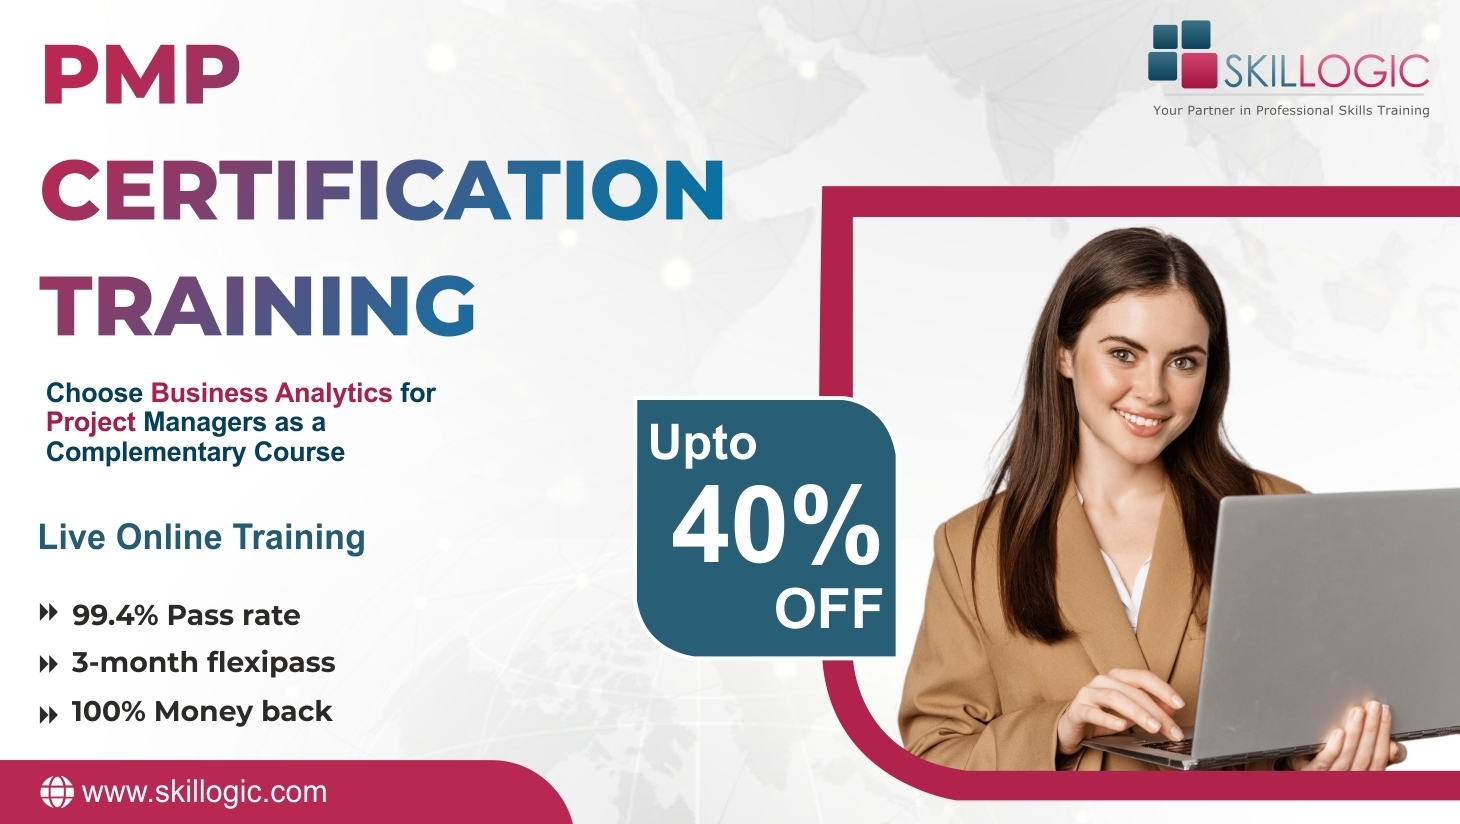 PMP Certification Training in Kolkata, Online Event